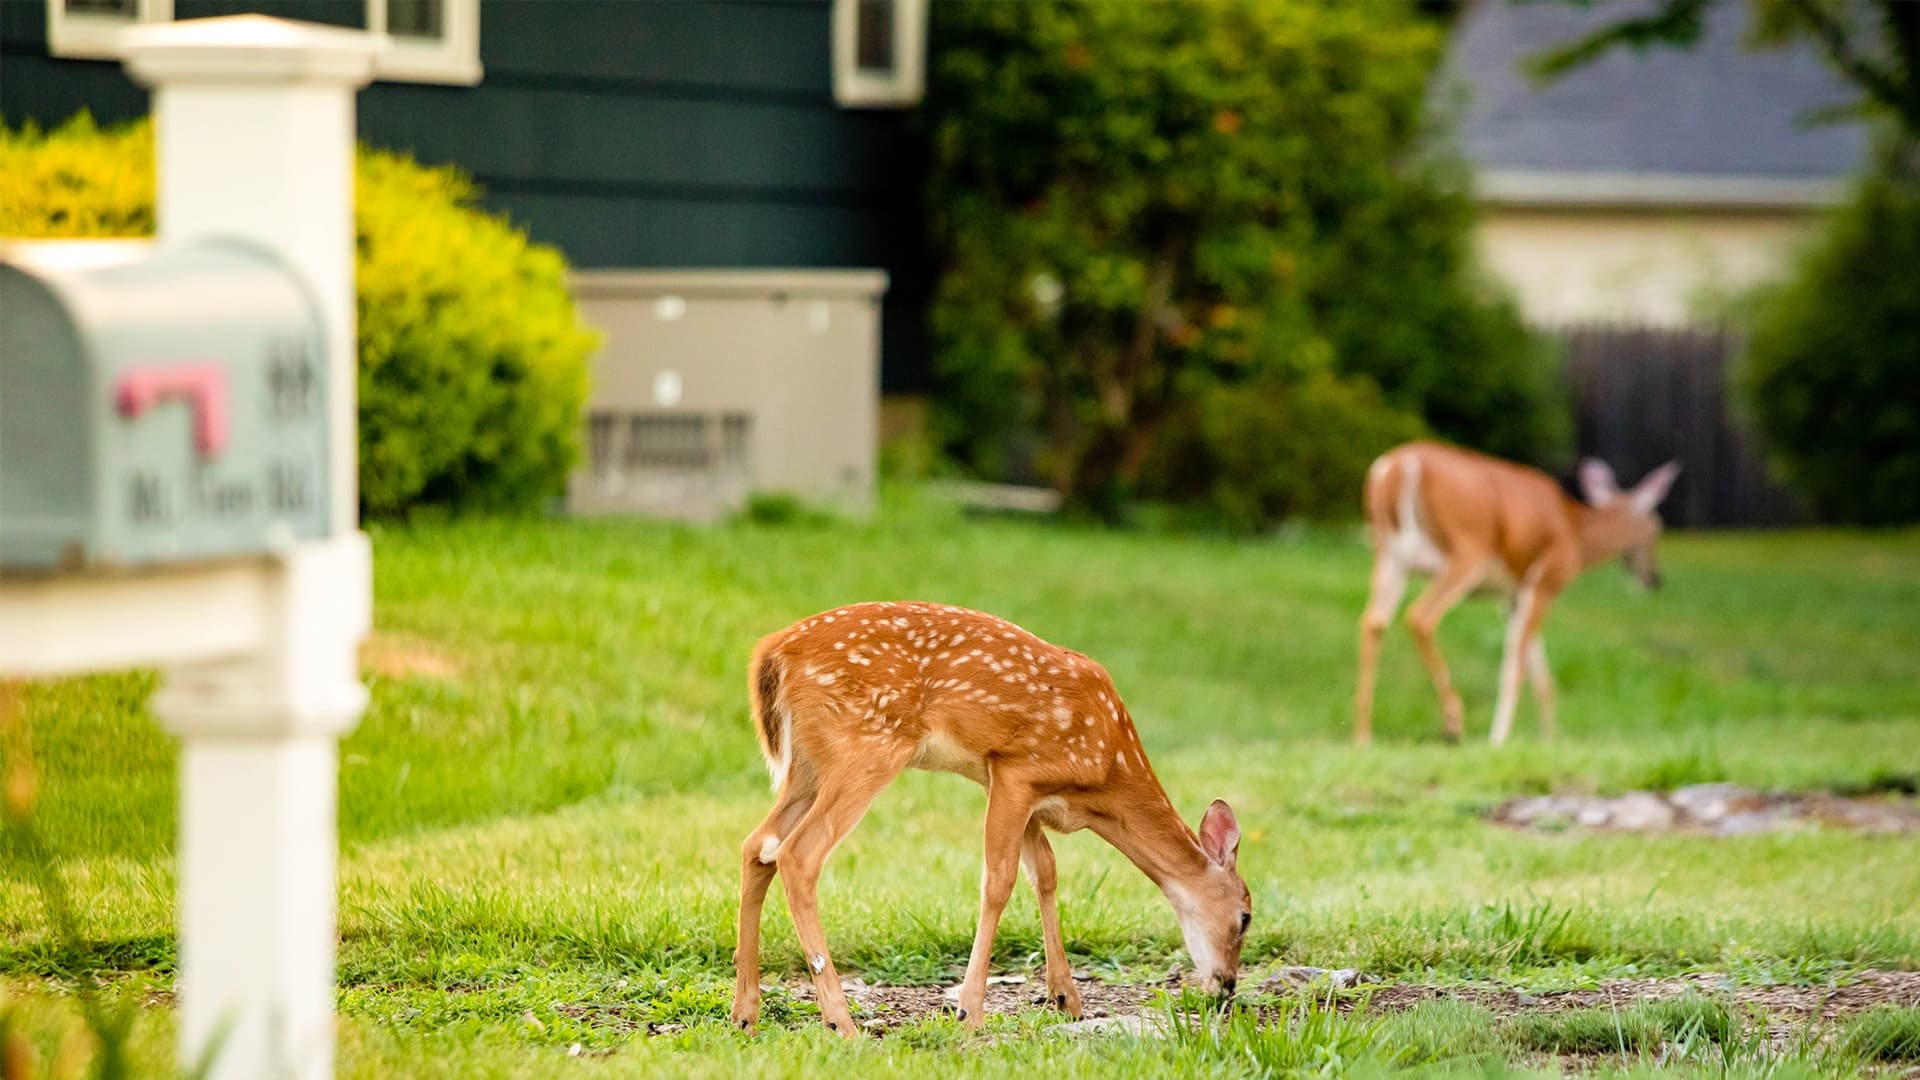 Deer in yard near mailbox